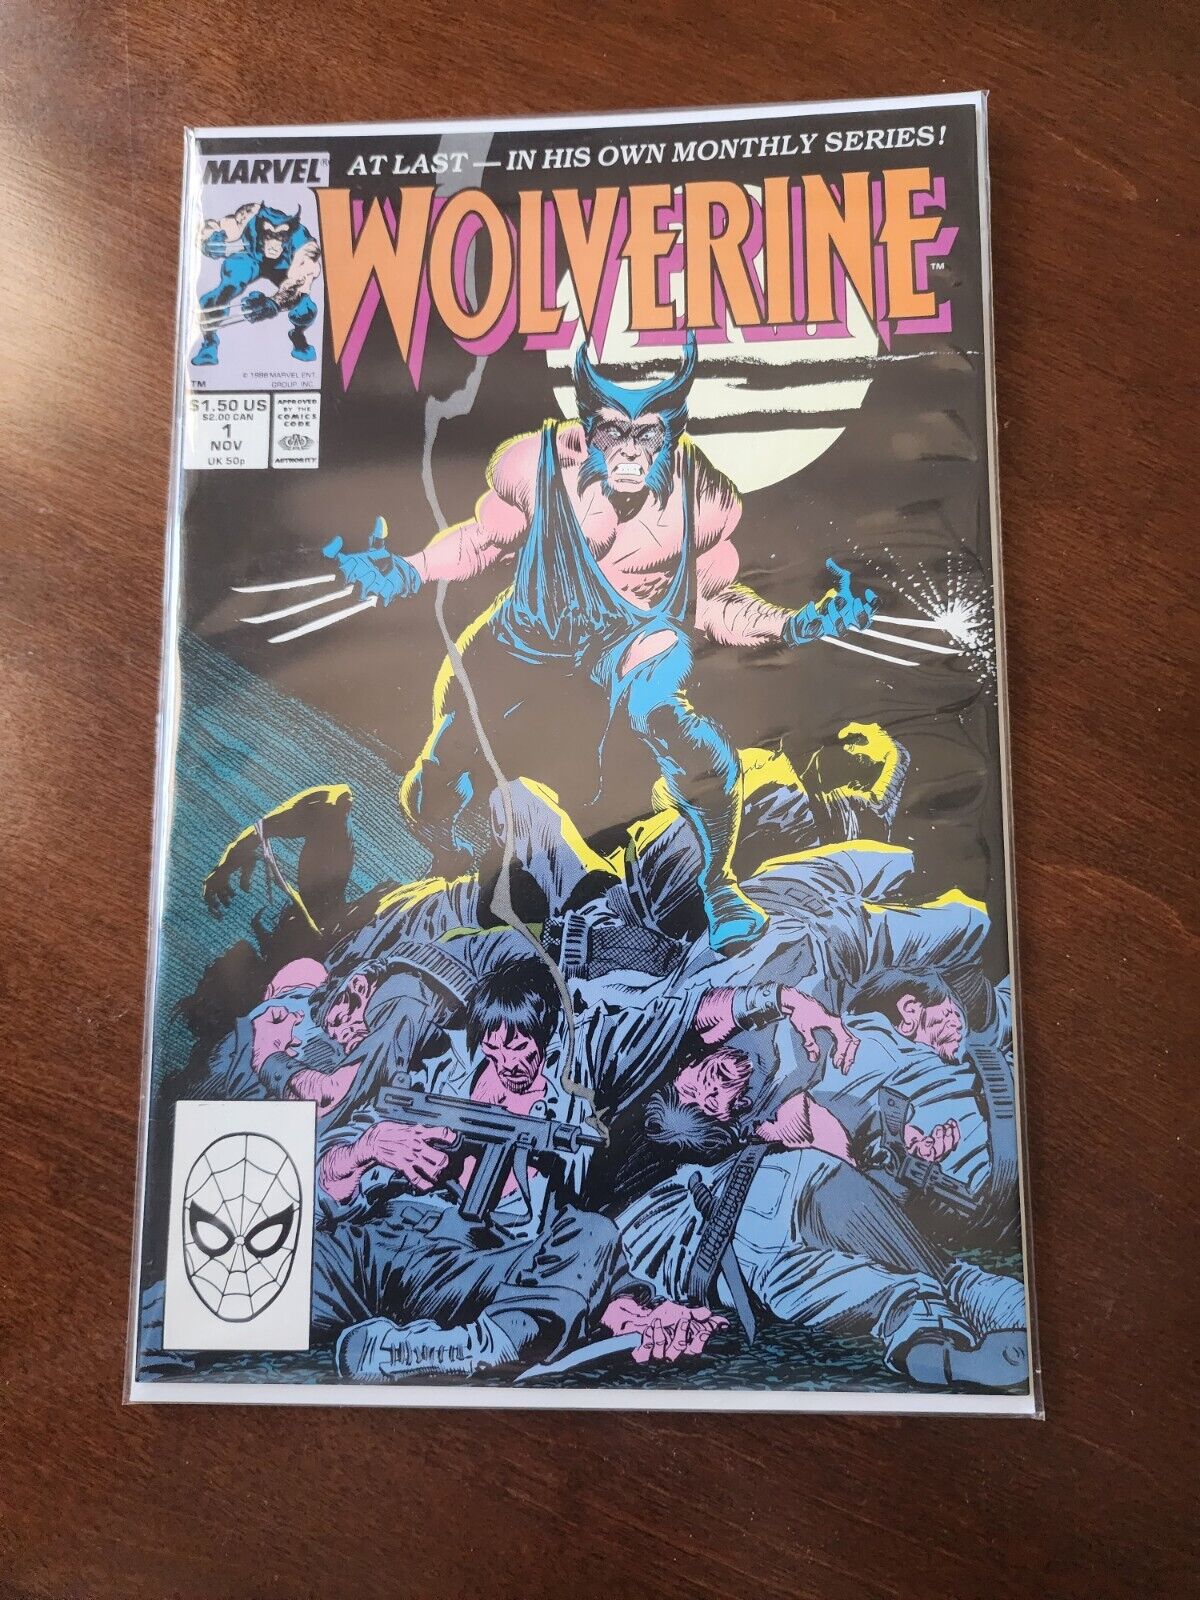 Wolverine #1 (Marvel Comics November 1988)  NM/ MINT